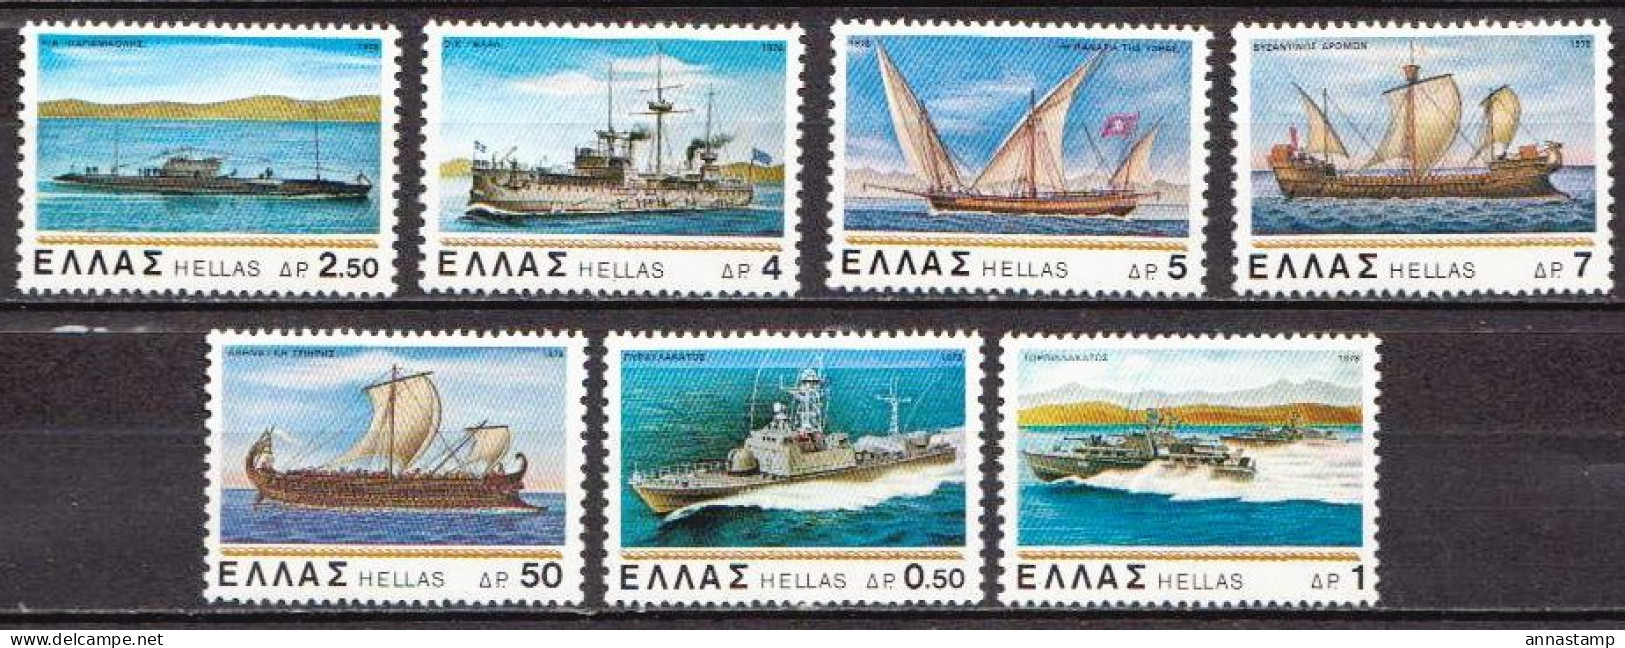 Greece MNH Set - Ships